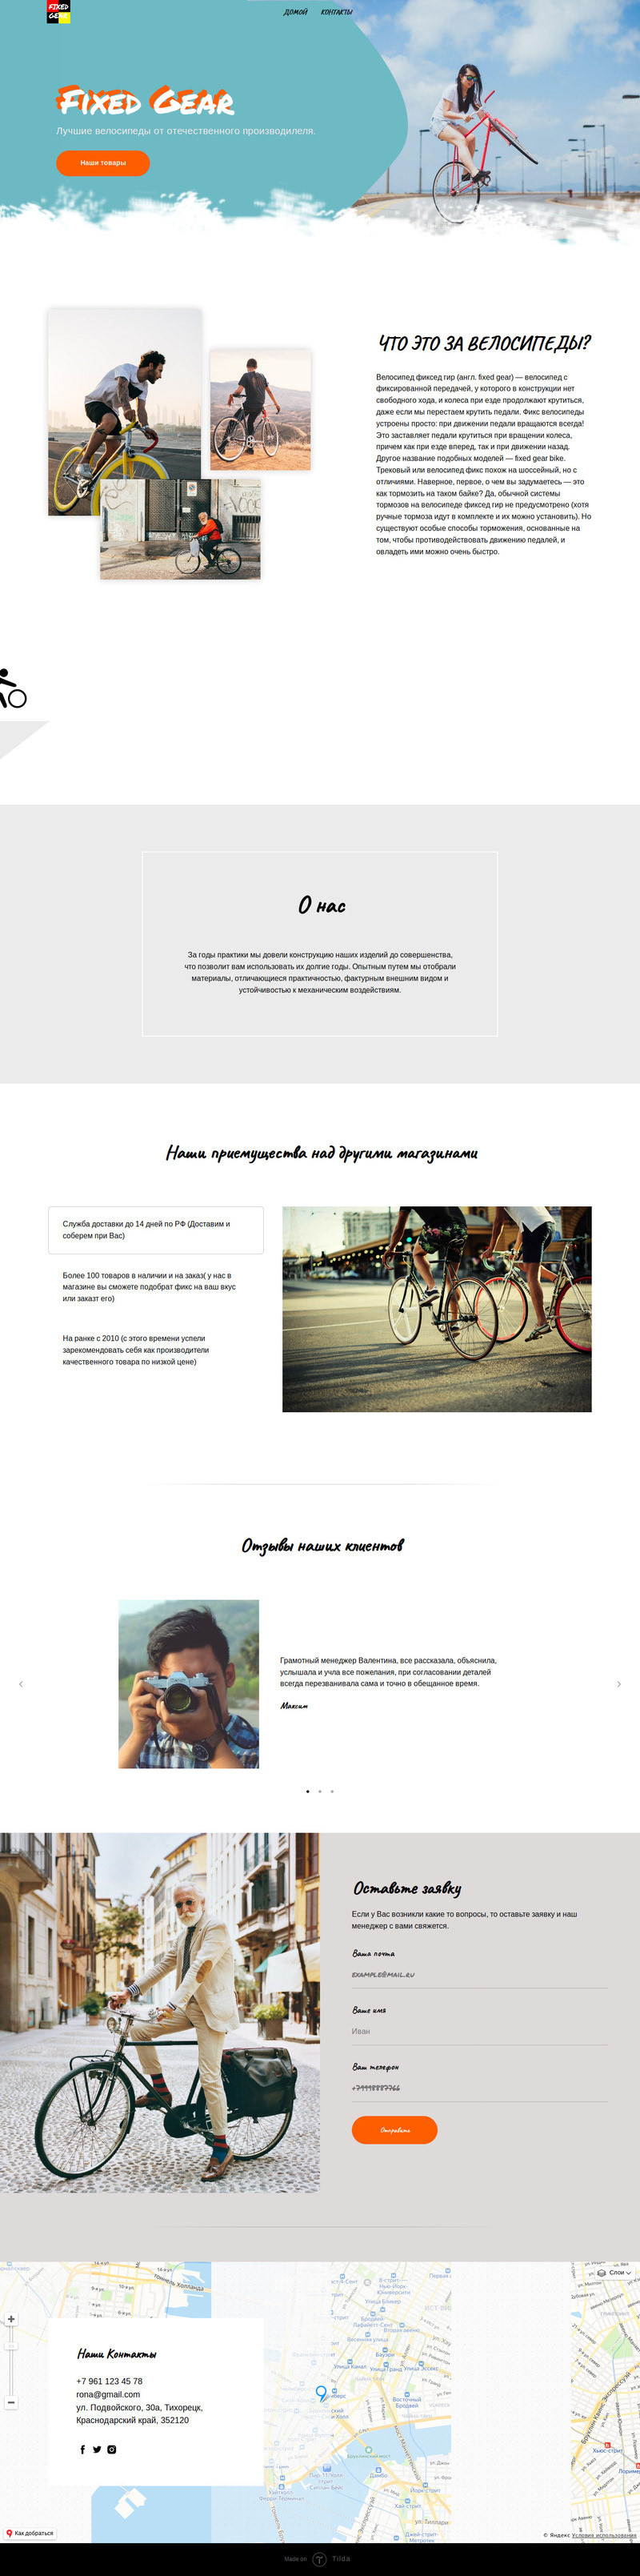 Image may contain: bicycle, bicycle wheel and screenshot